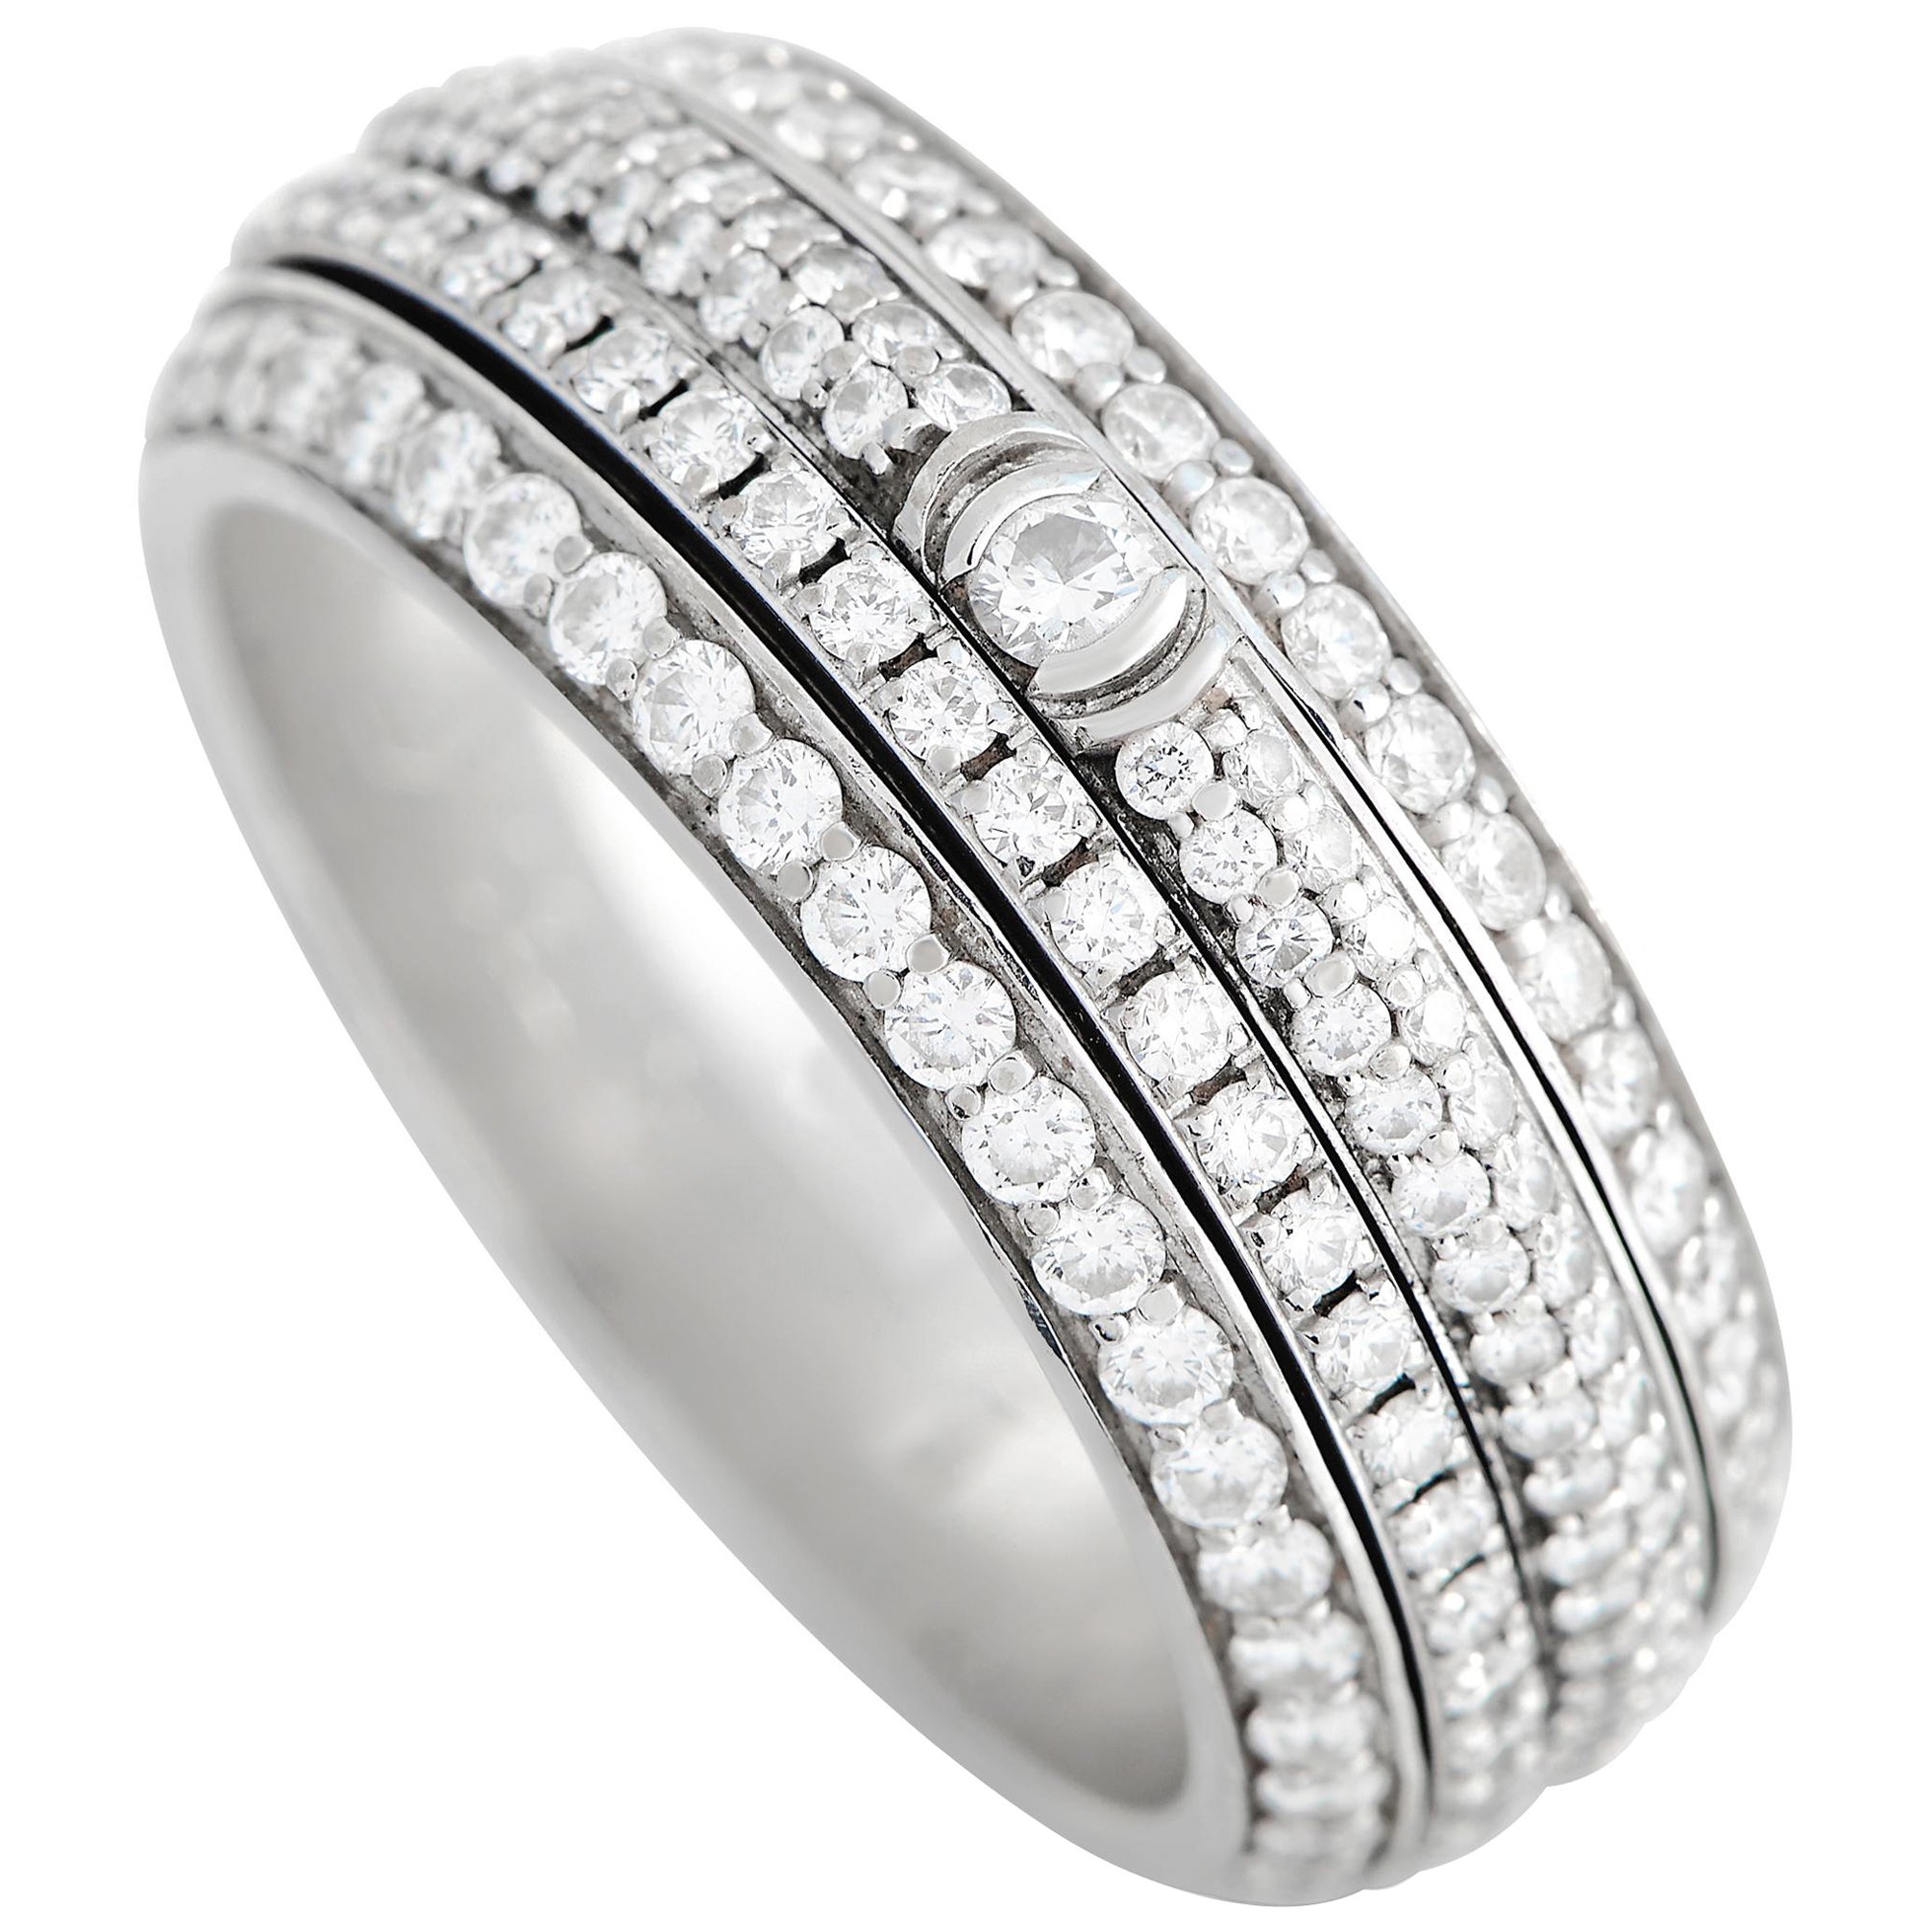 Piaget Possession 18k White Gold 2.24 Carat Diamond Ring For Sale